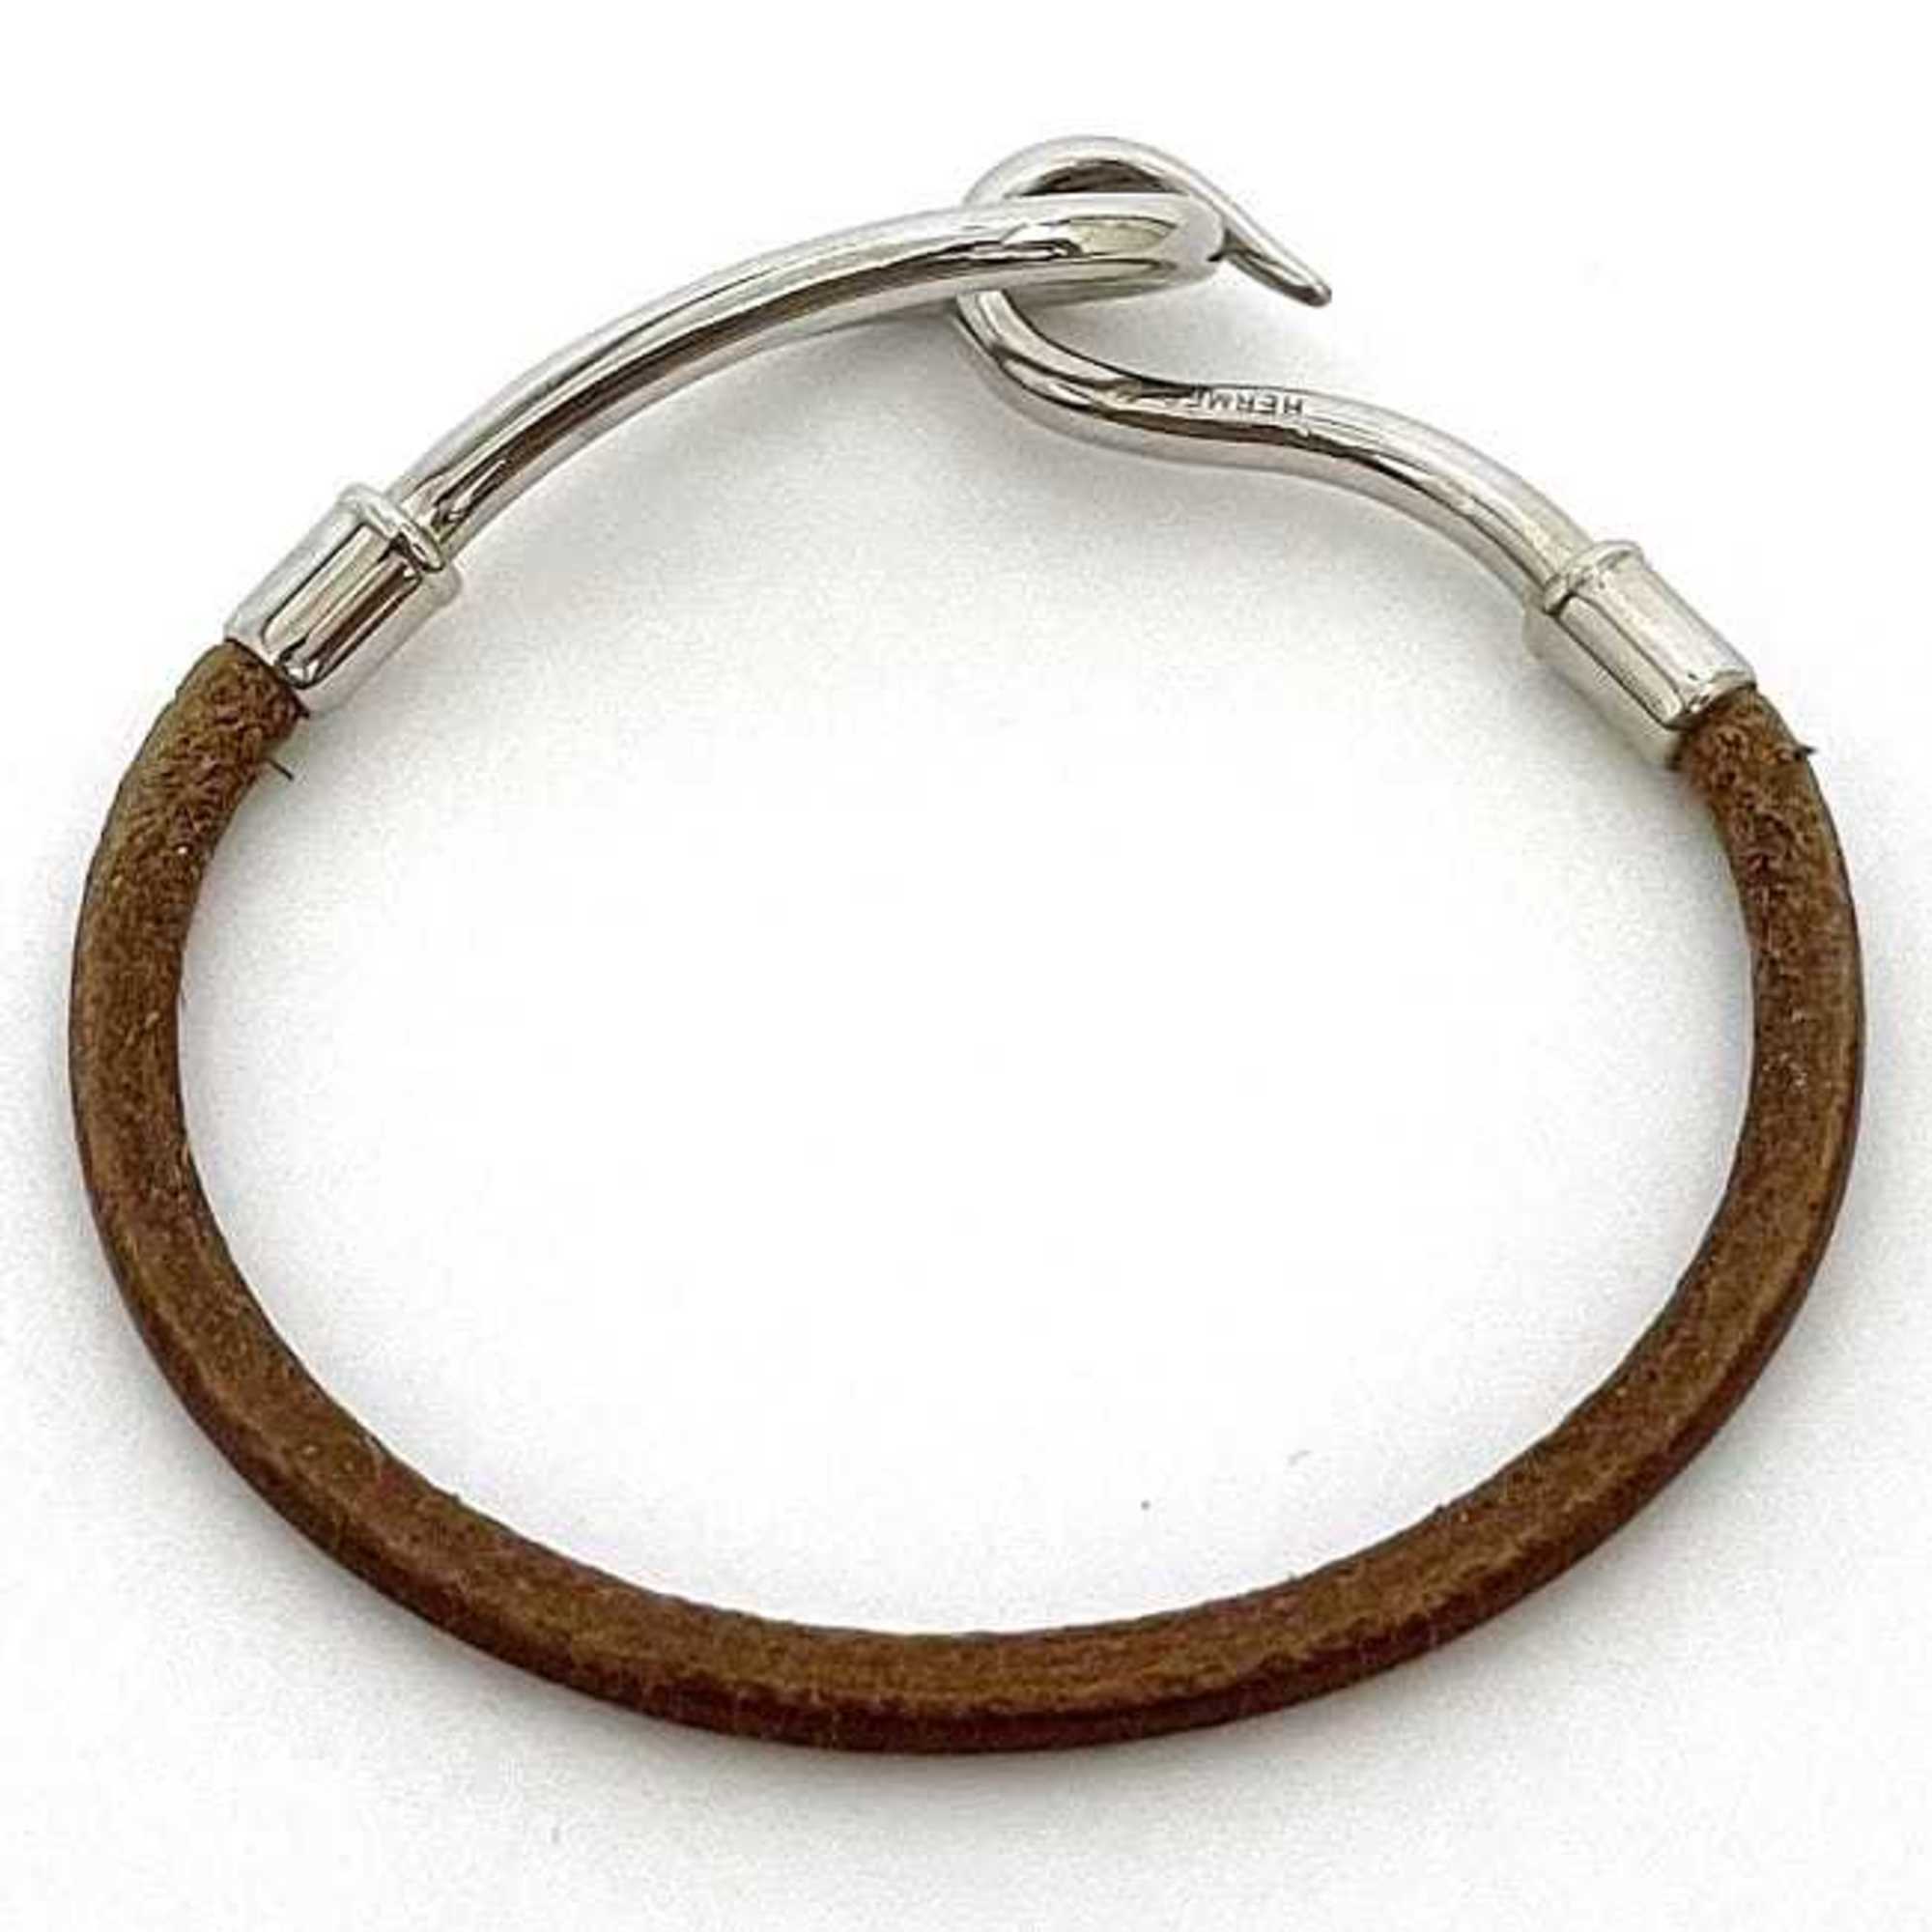 Elegant Leather Bracelet for Men and Women - AB Condition